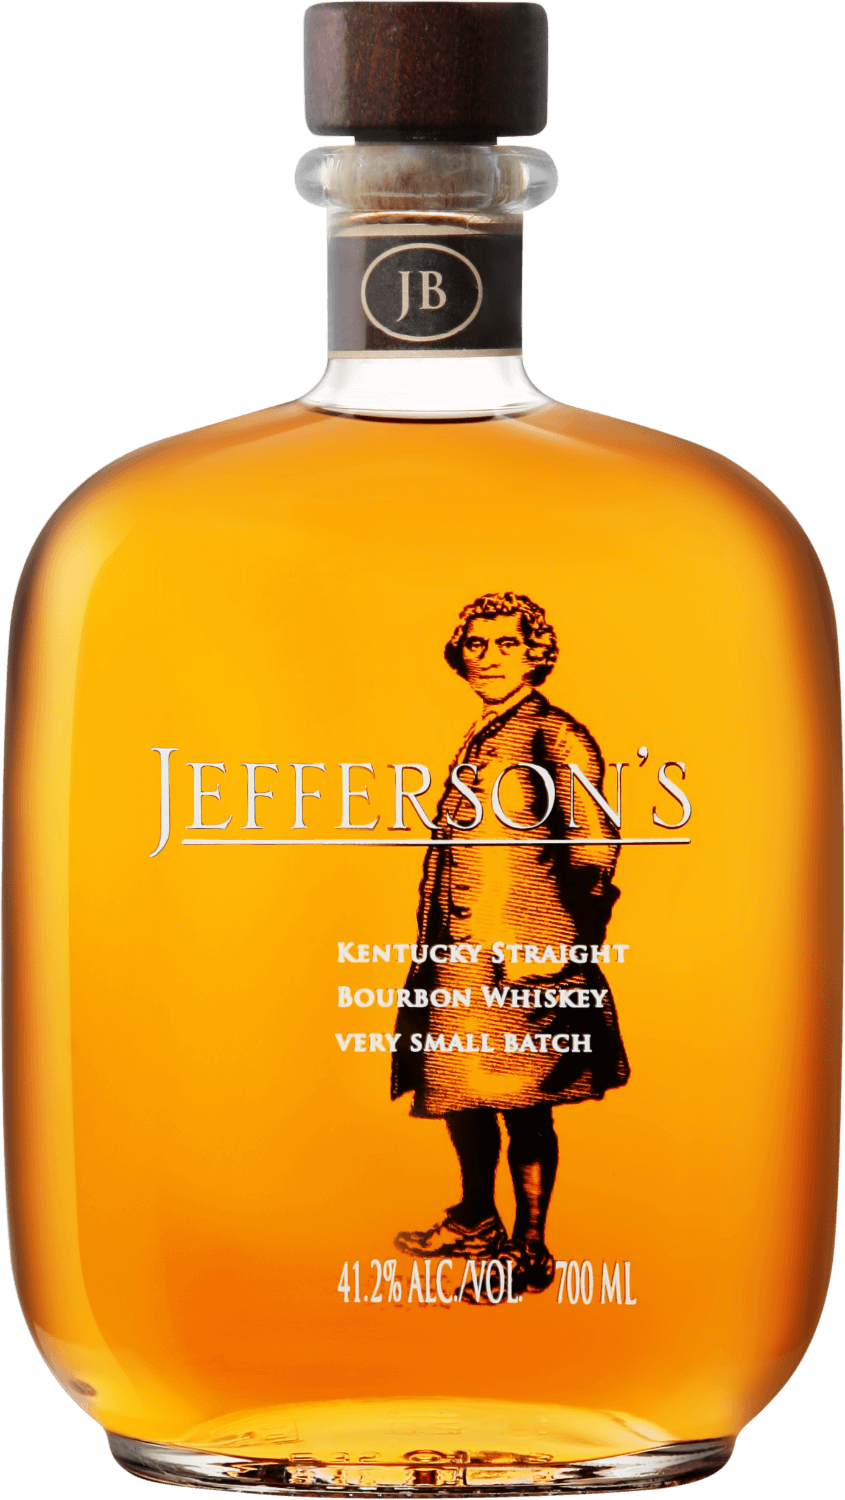 Jefferson’s Kentucky Straight Bourbon Whiskey woodford reserve kentucky straight bourbon whiskey gift box with glass